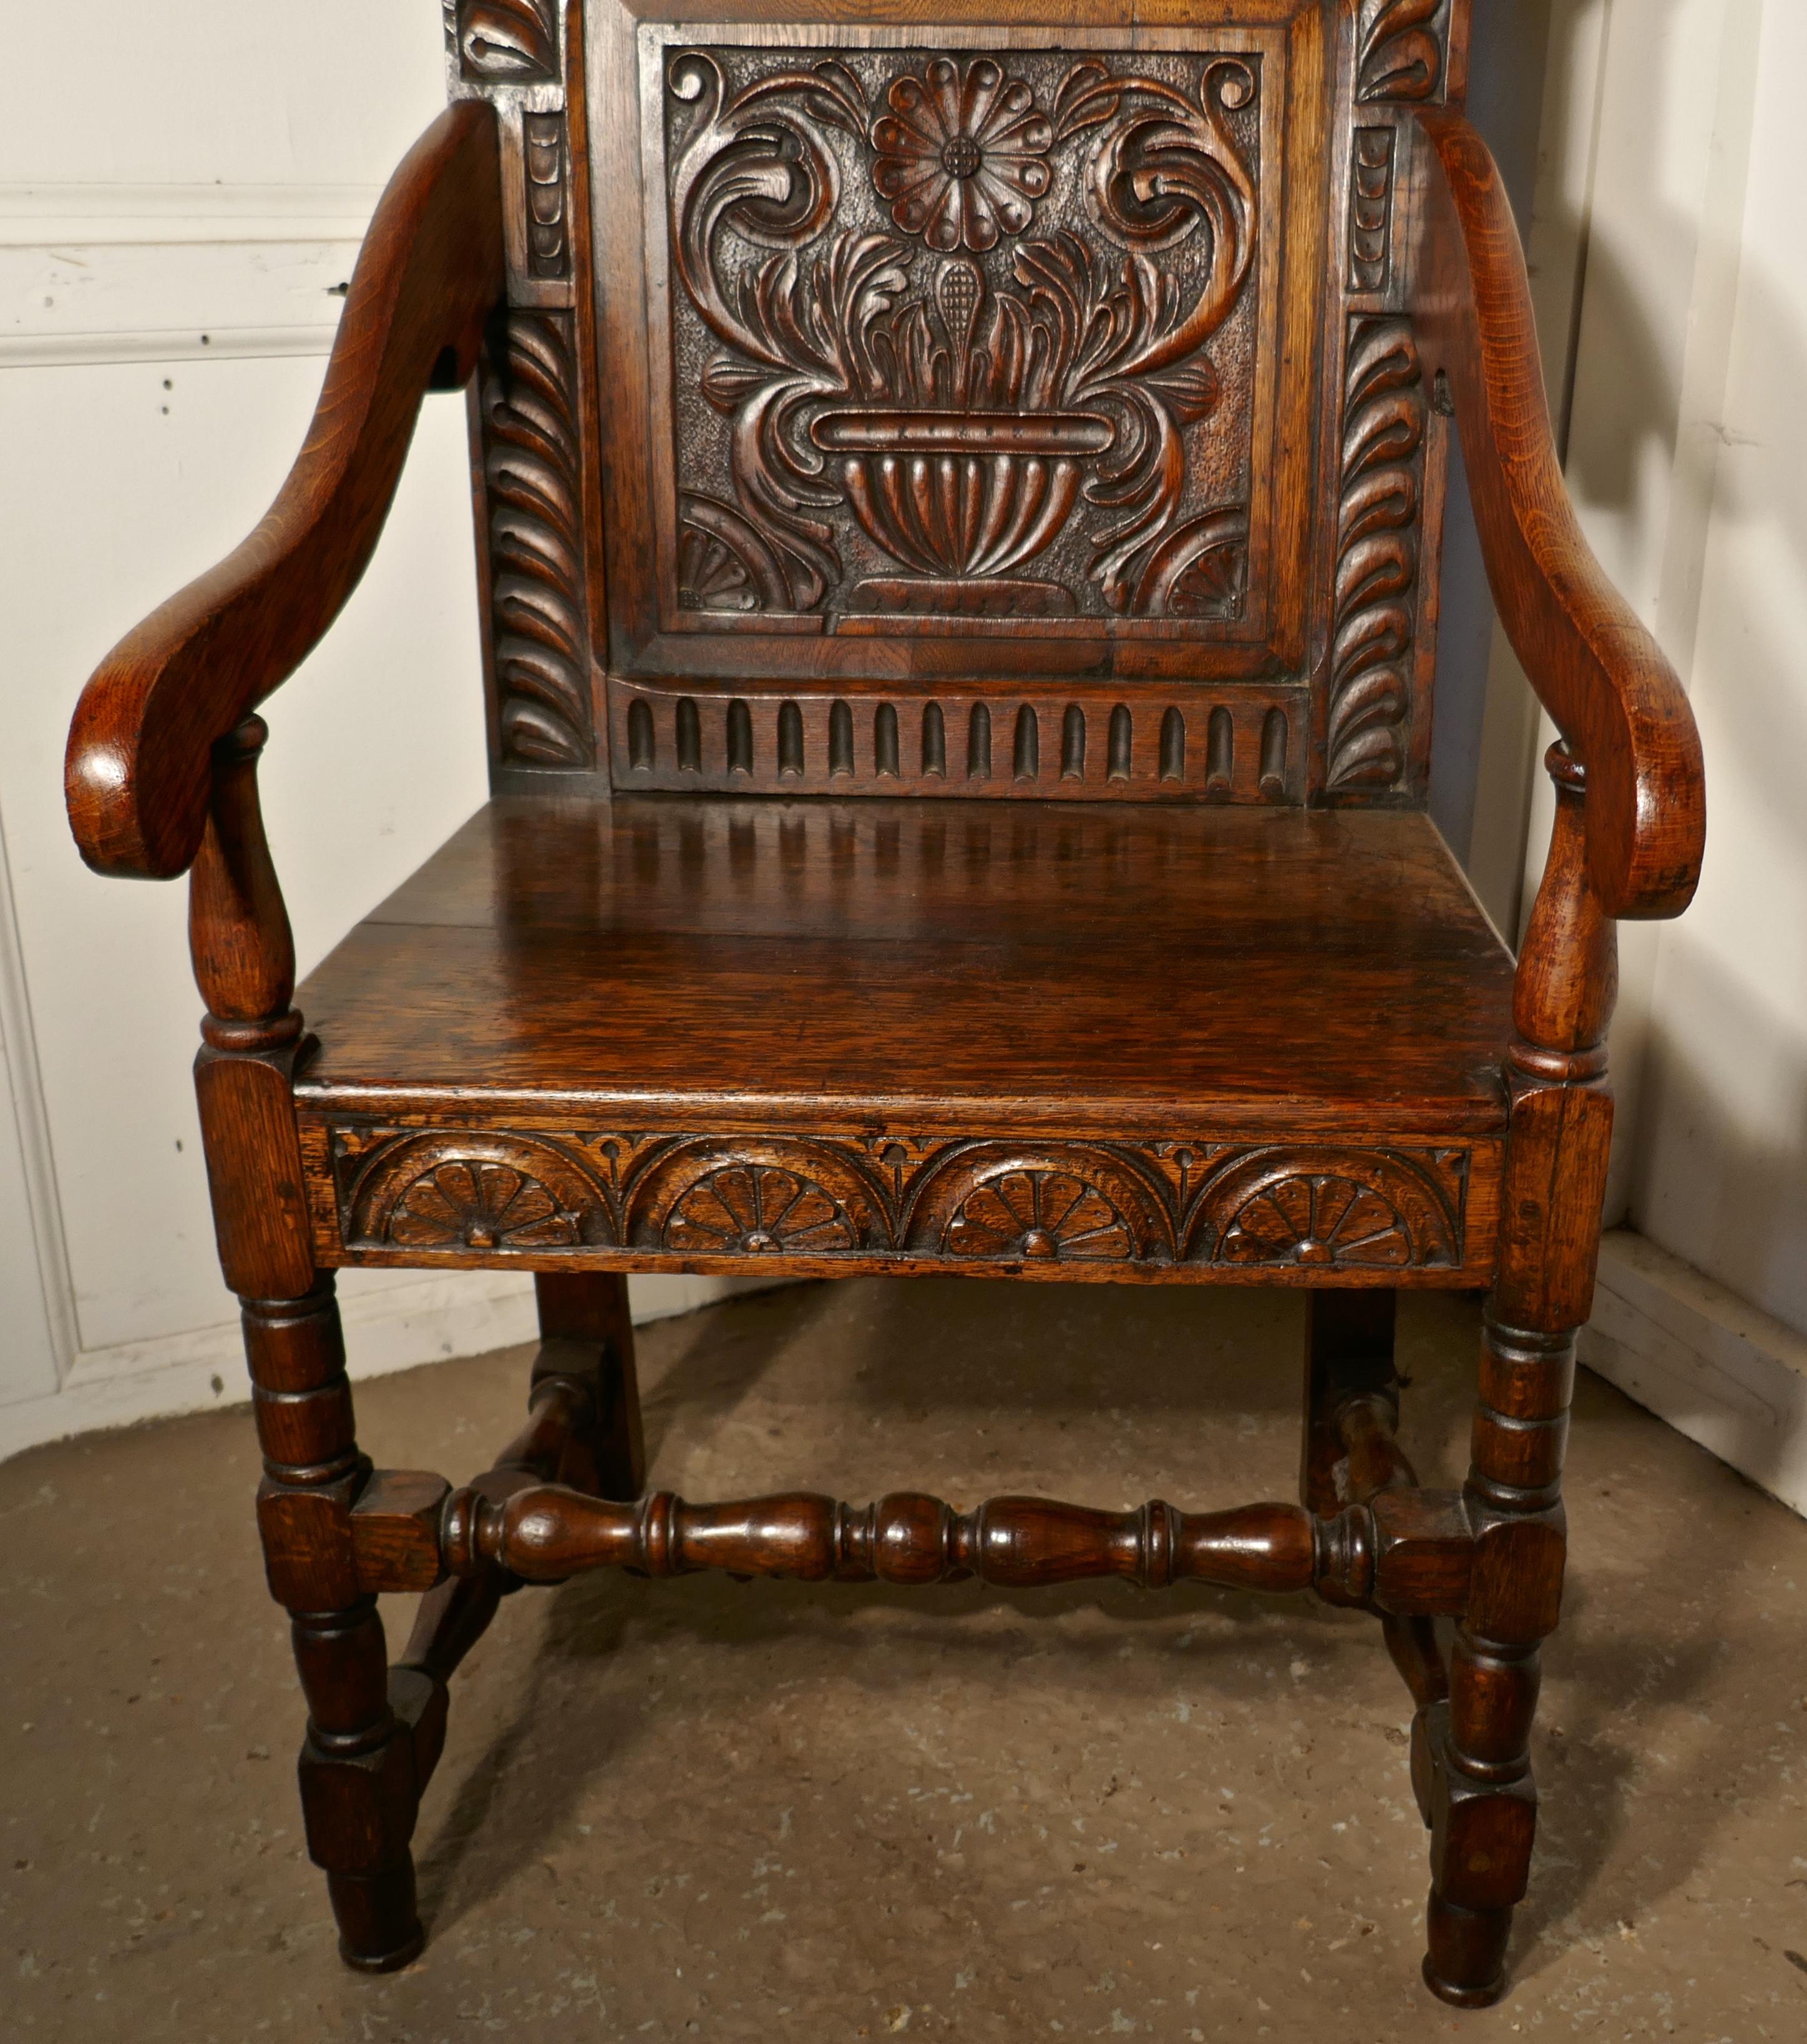 17th century chairs